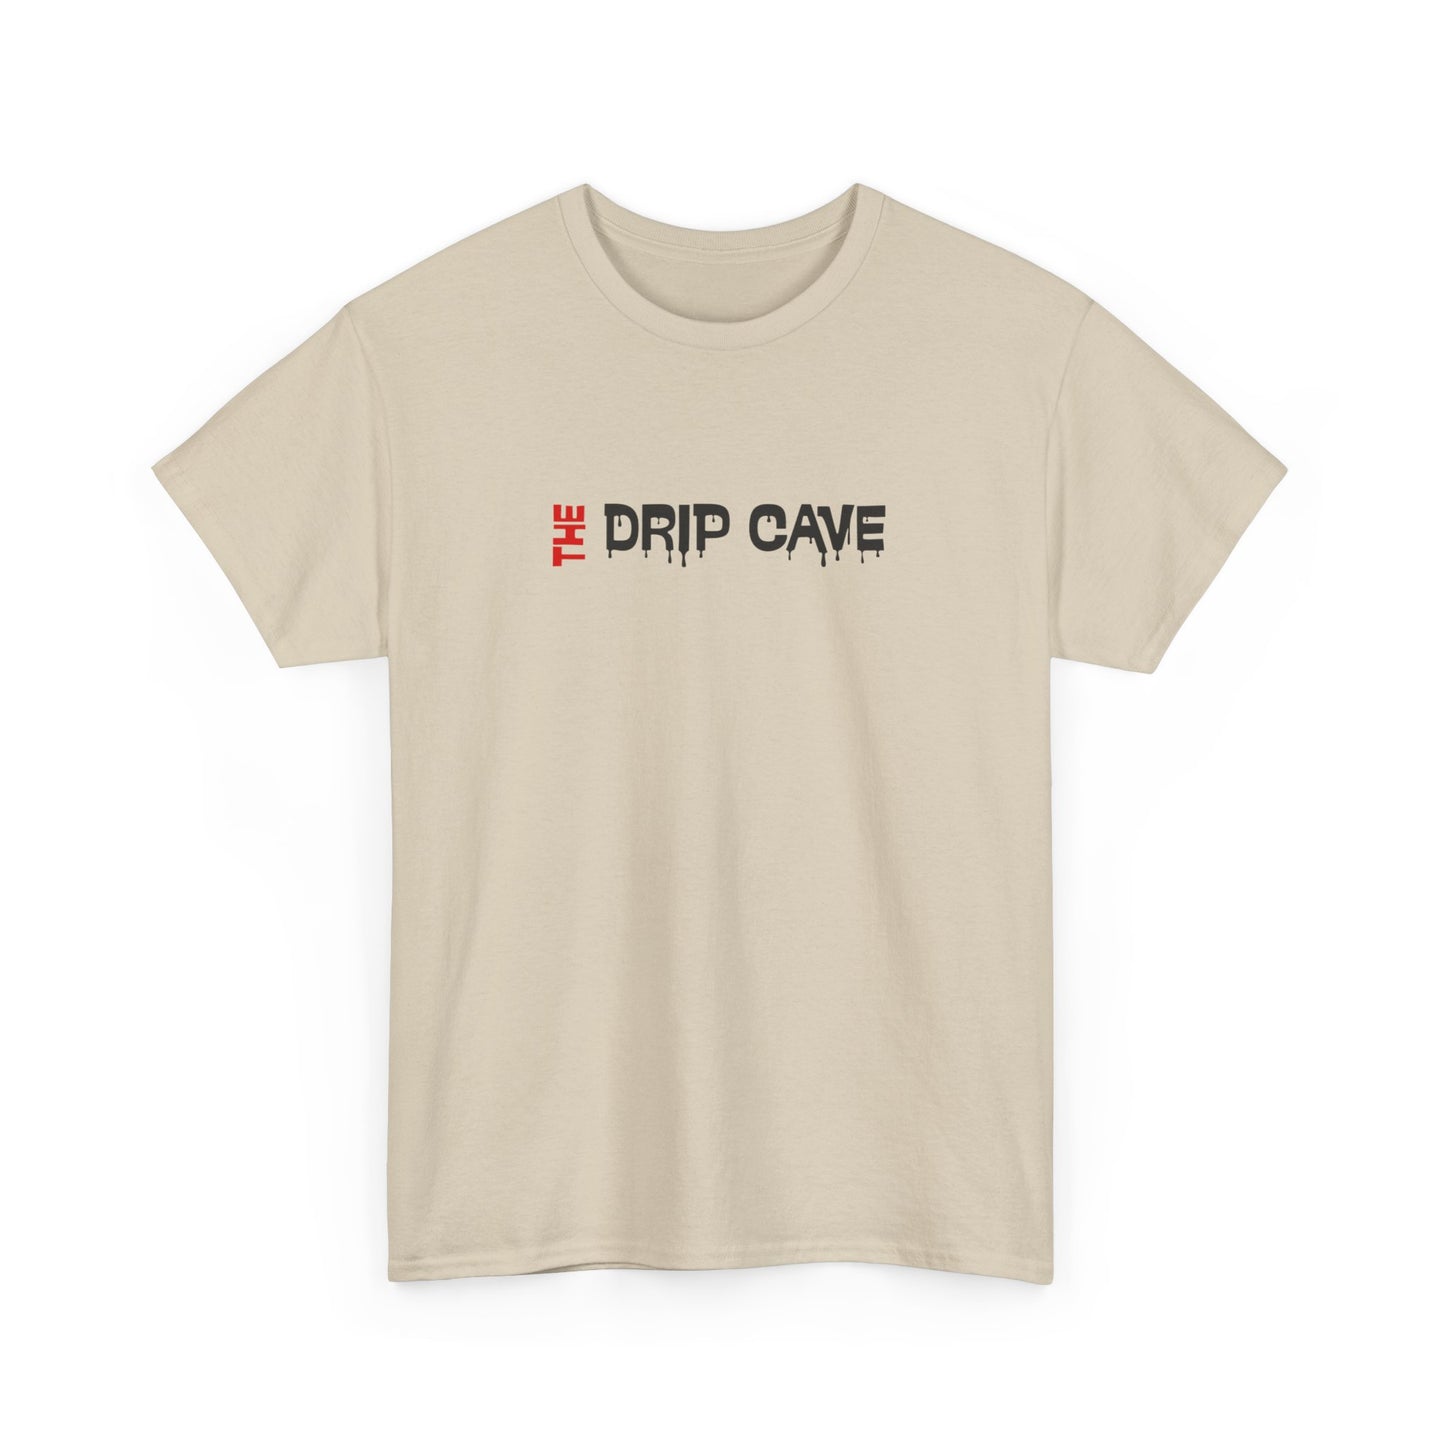 THE DRIP CAVE - Tee